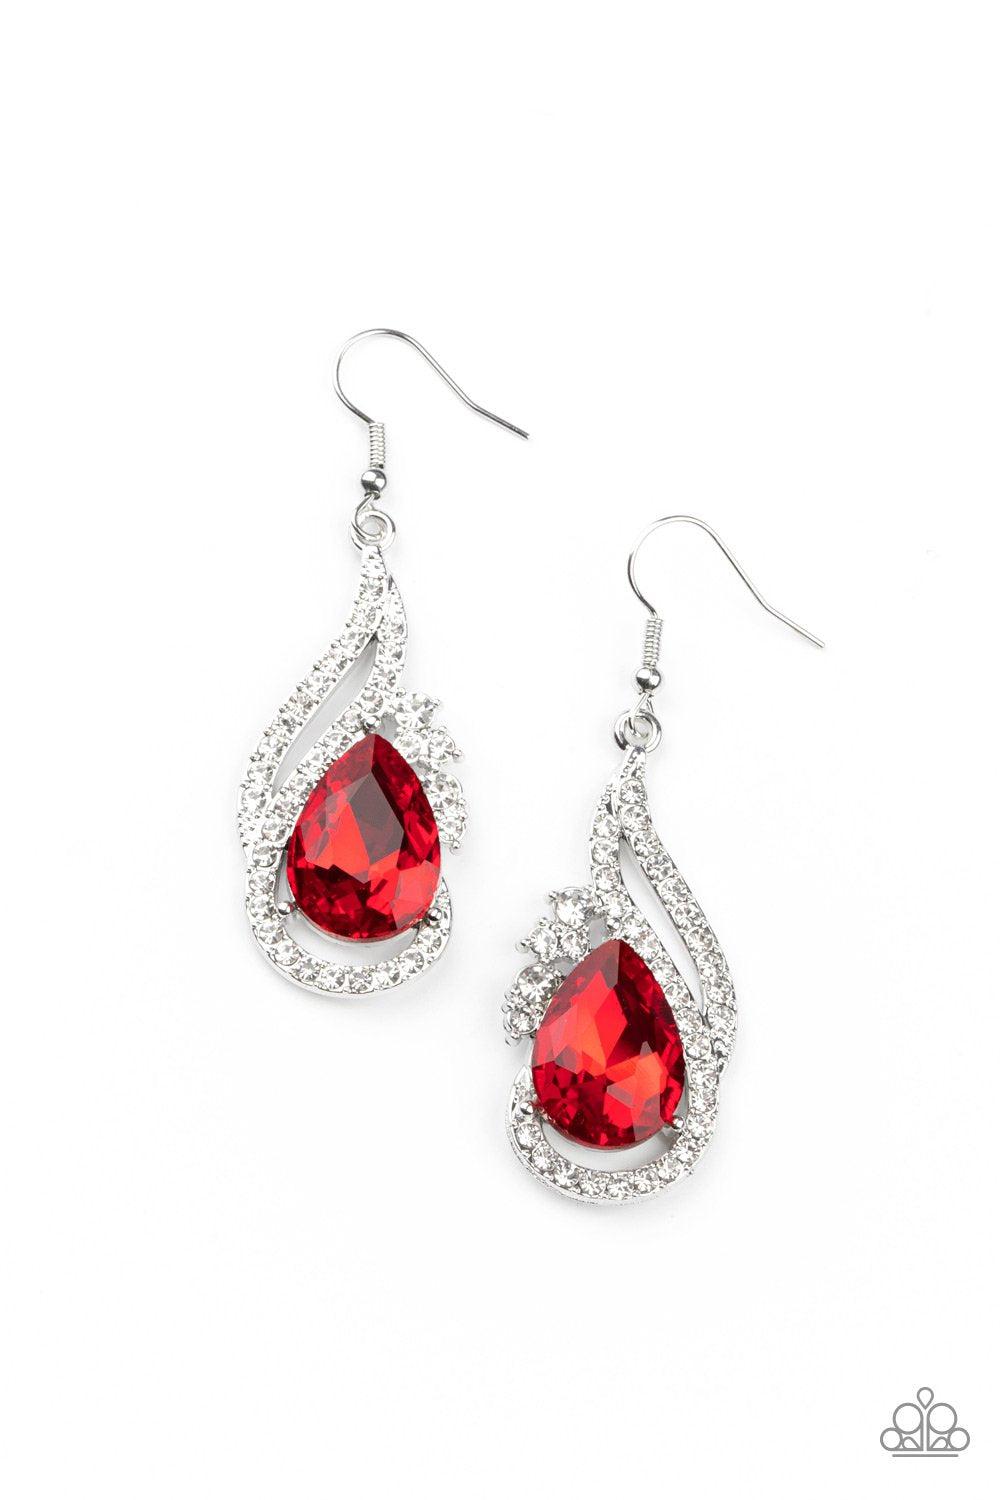 Dancefloor Diva Red and White Rhinestone Earrings - Paparazzi Accessories - lightbox -CarasShop.com - $5 Jewelry by Cara Jewels